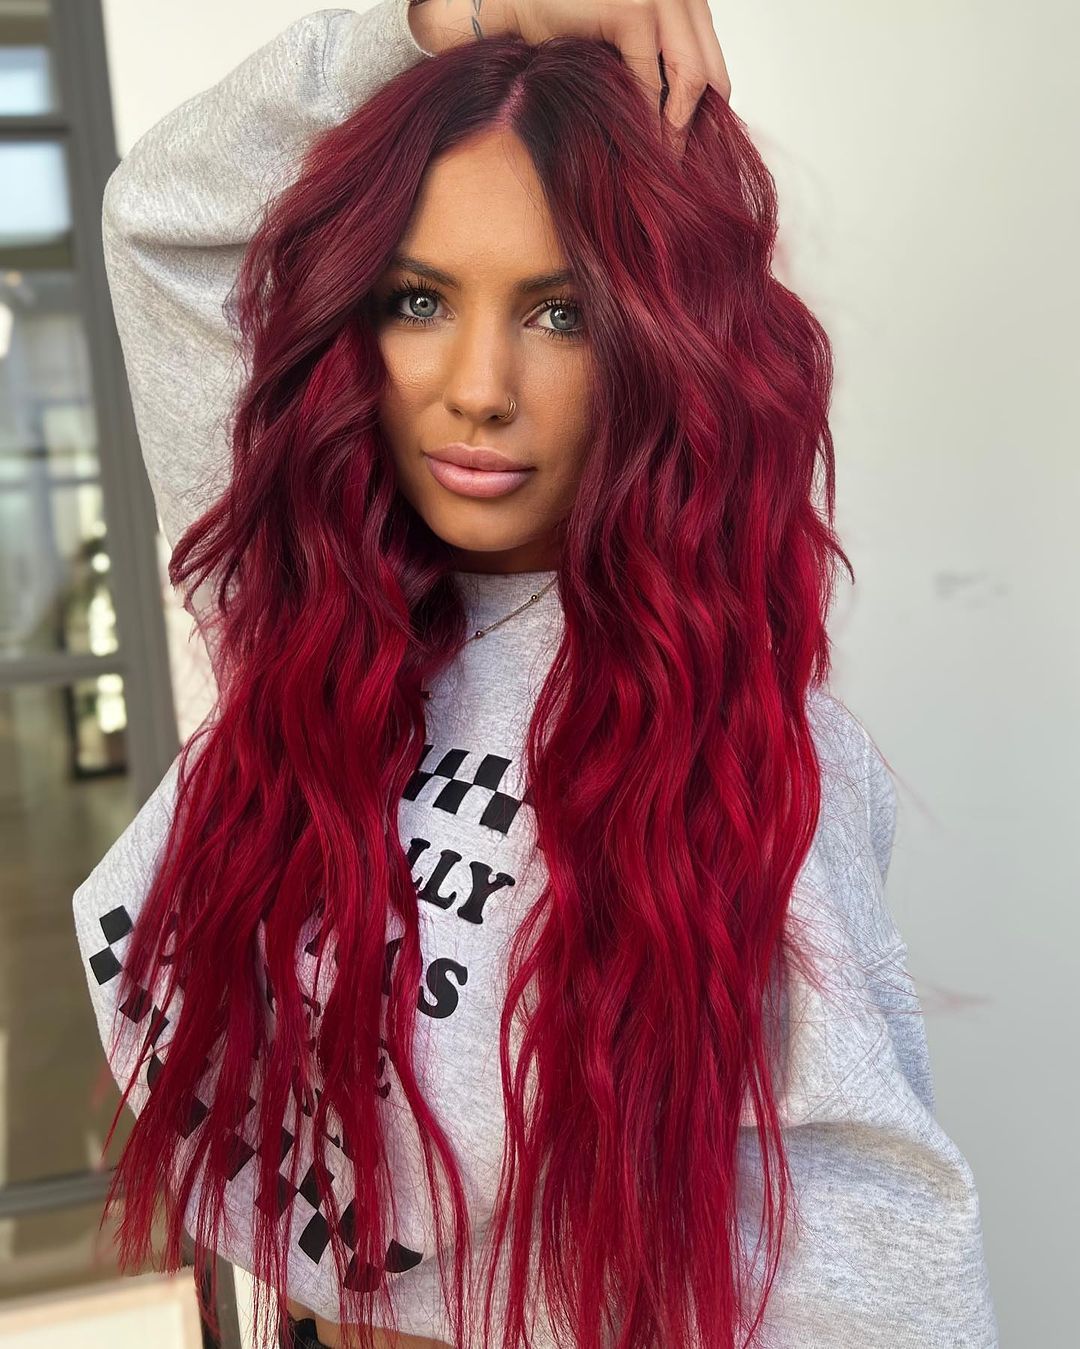 lang rood haar